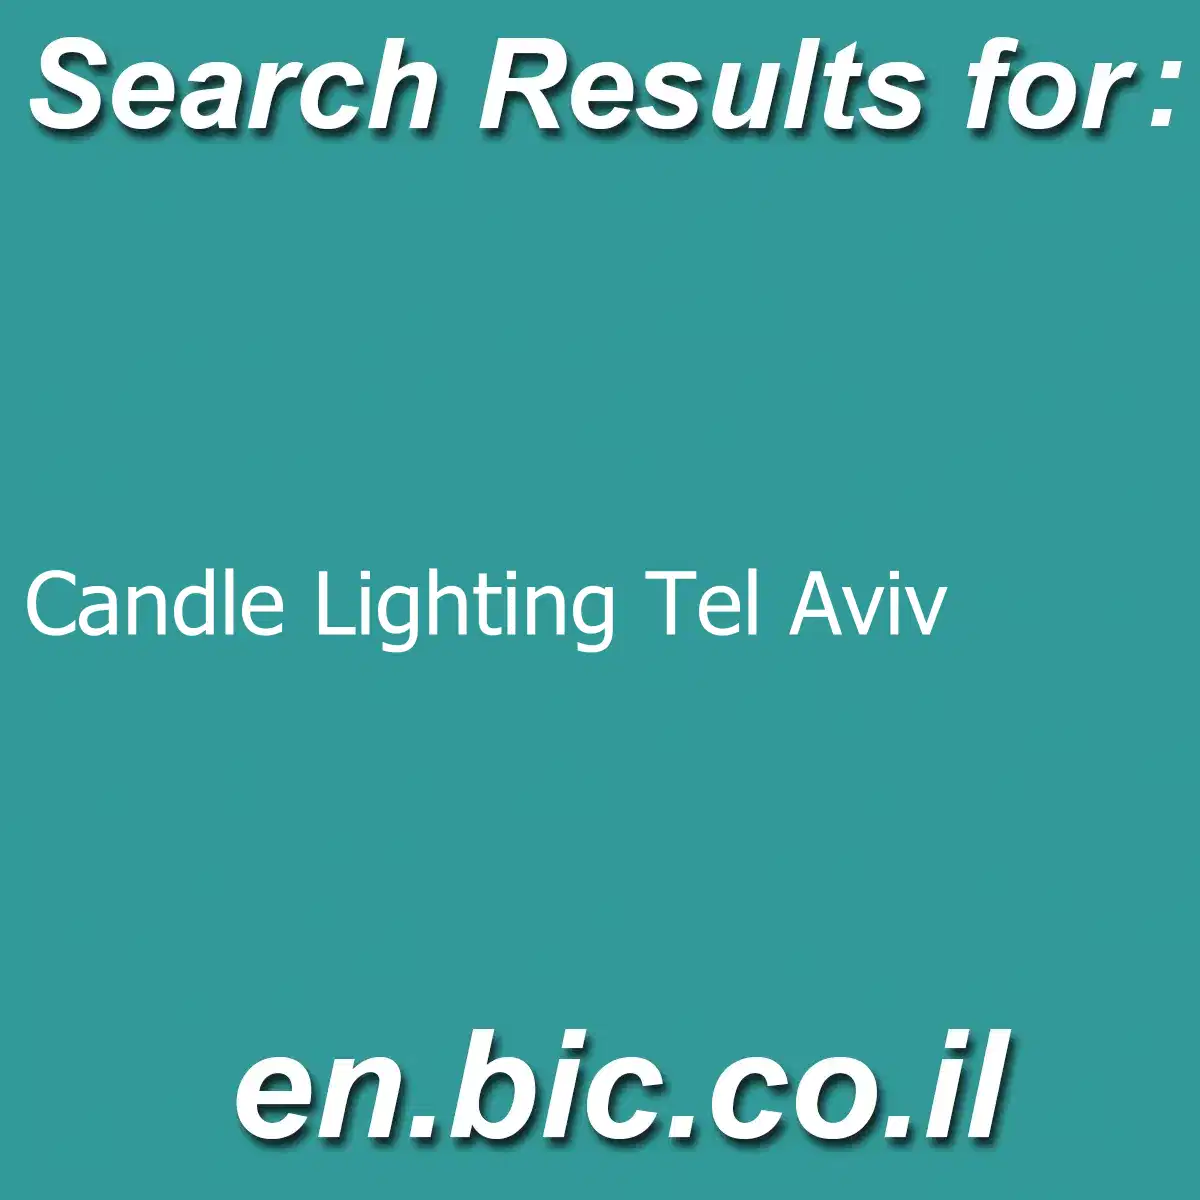 Candle Lighting Tel Aviv